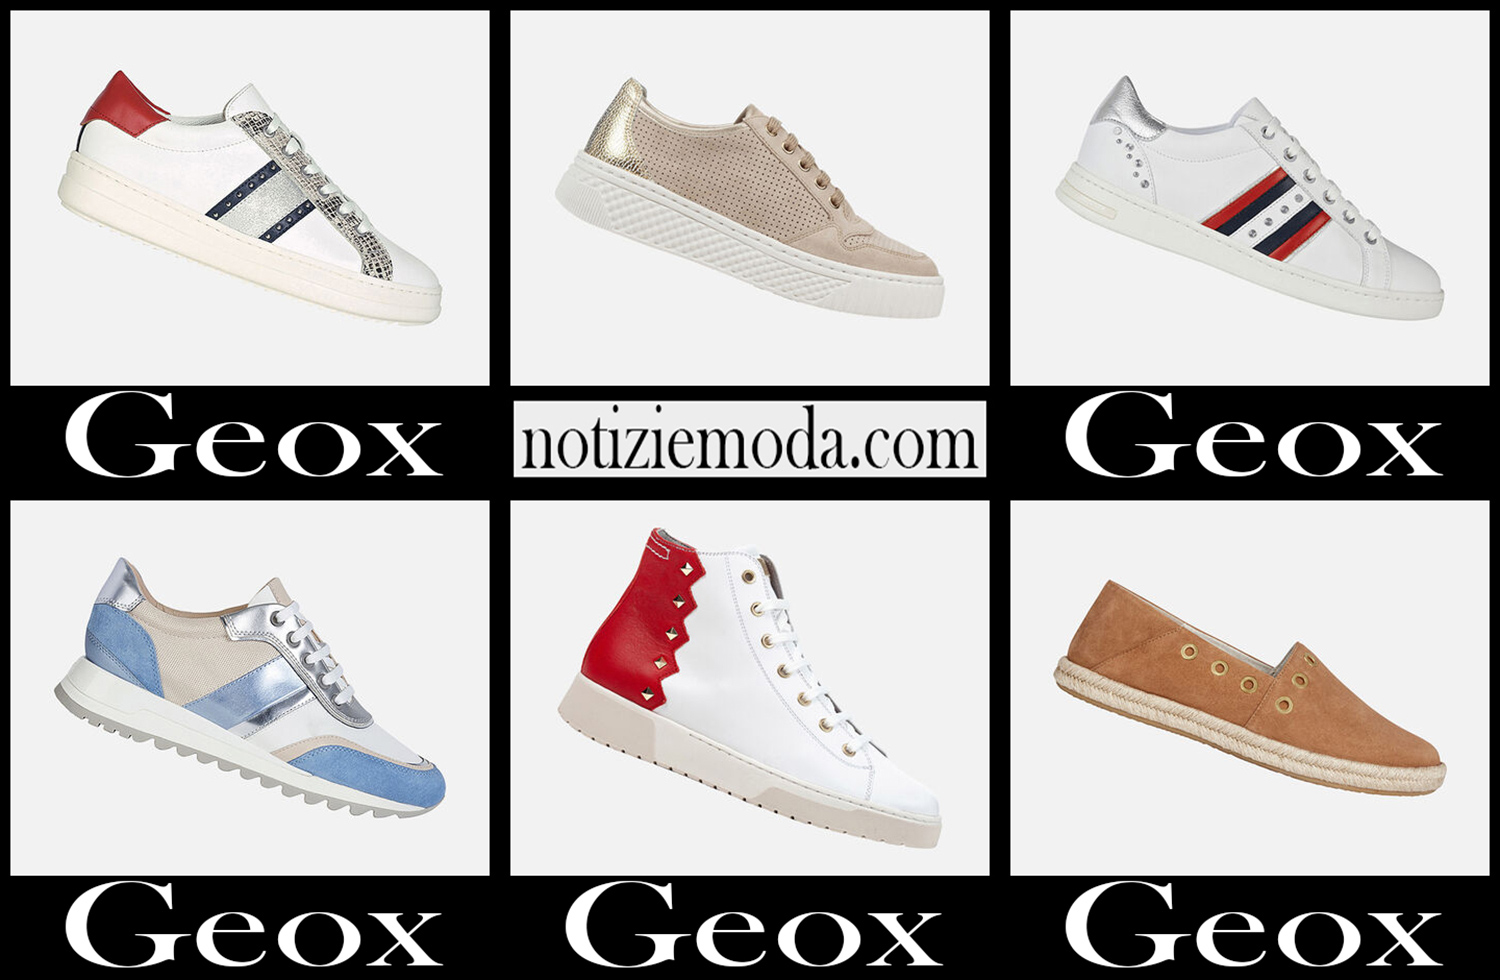 Nuovi arrivi sneakers Geox 2021 calzature moda donna